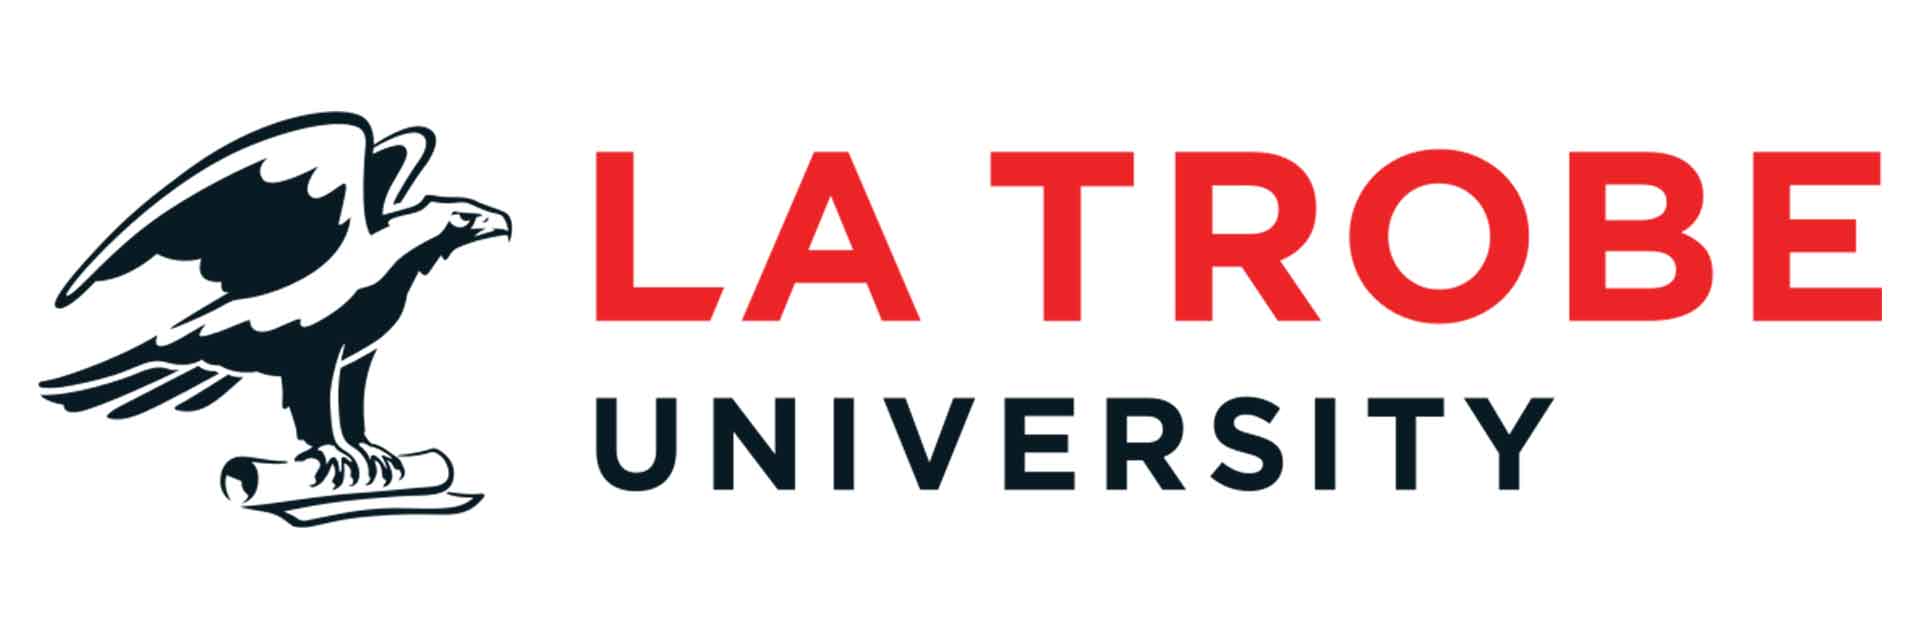 LaTrobe-University